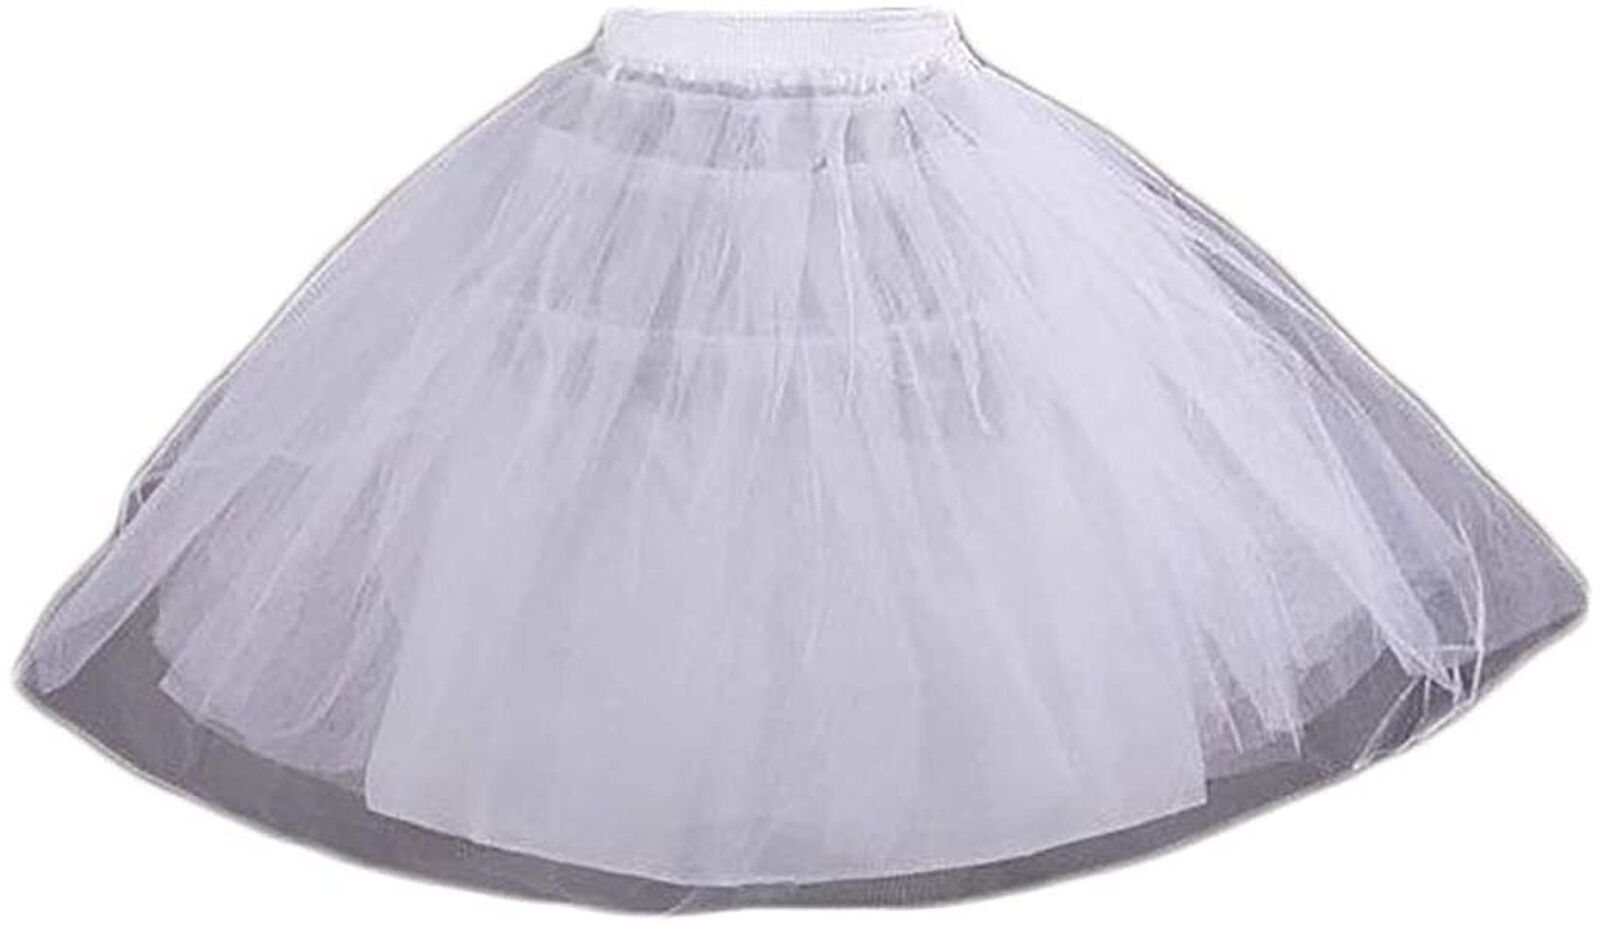 3 Layers Bridal Petticoat Hoopless Skirt Crinoline Slip Wedding Lace Edge Dress 